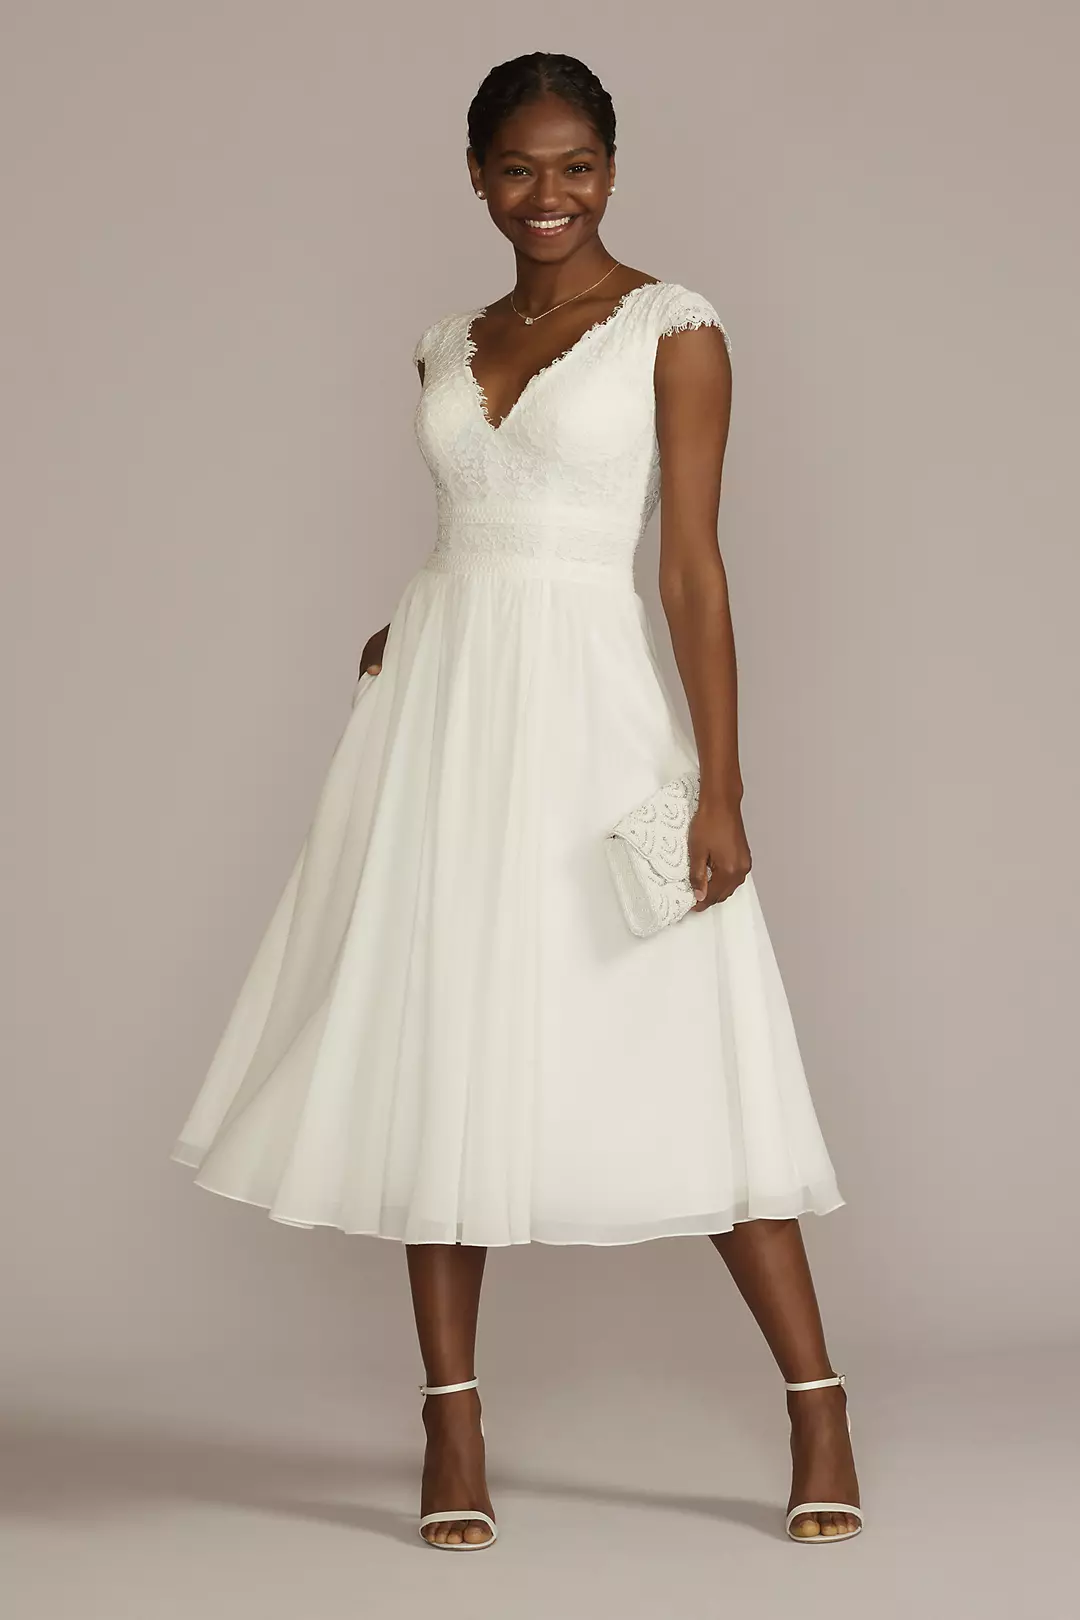 Lace Illusion Back Chiffon Tea Length Wedding Gown Image 1